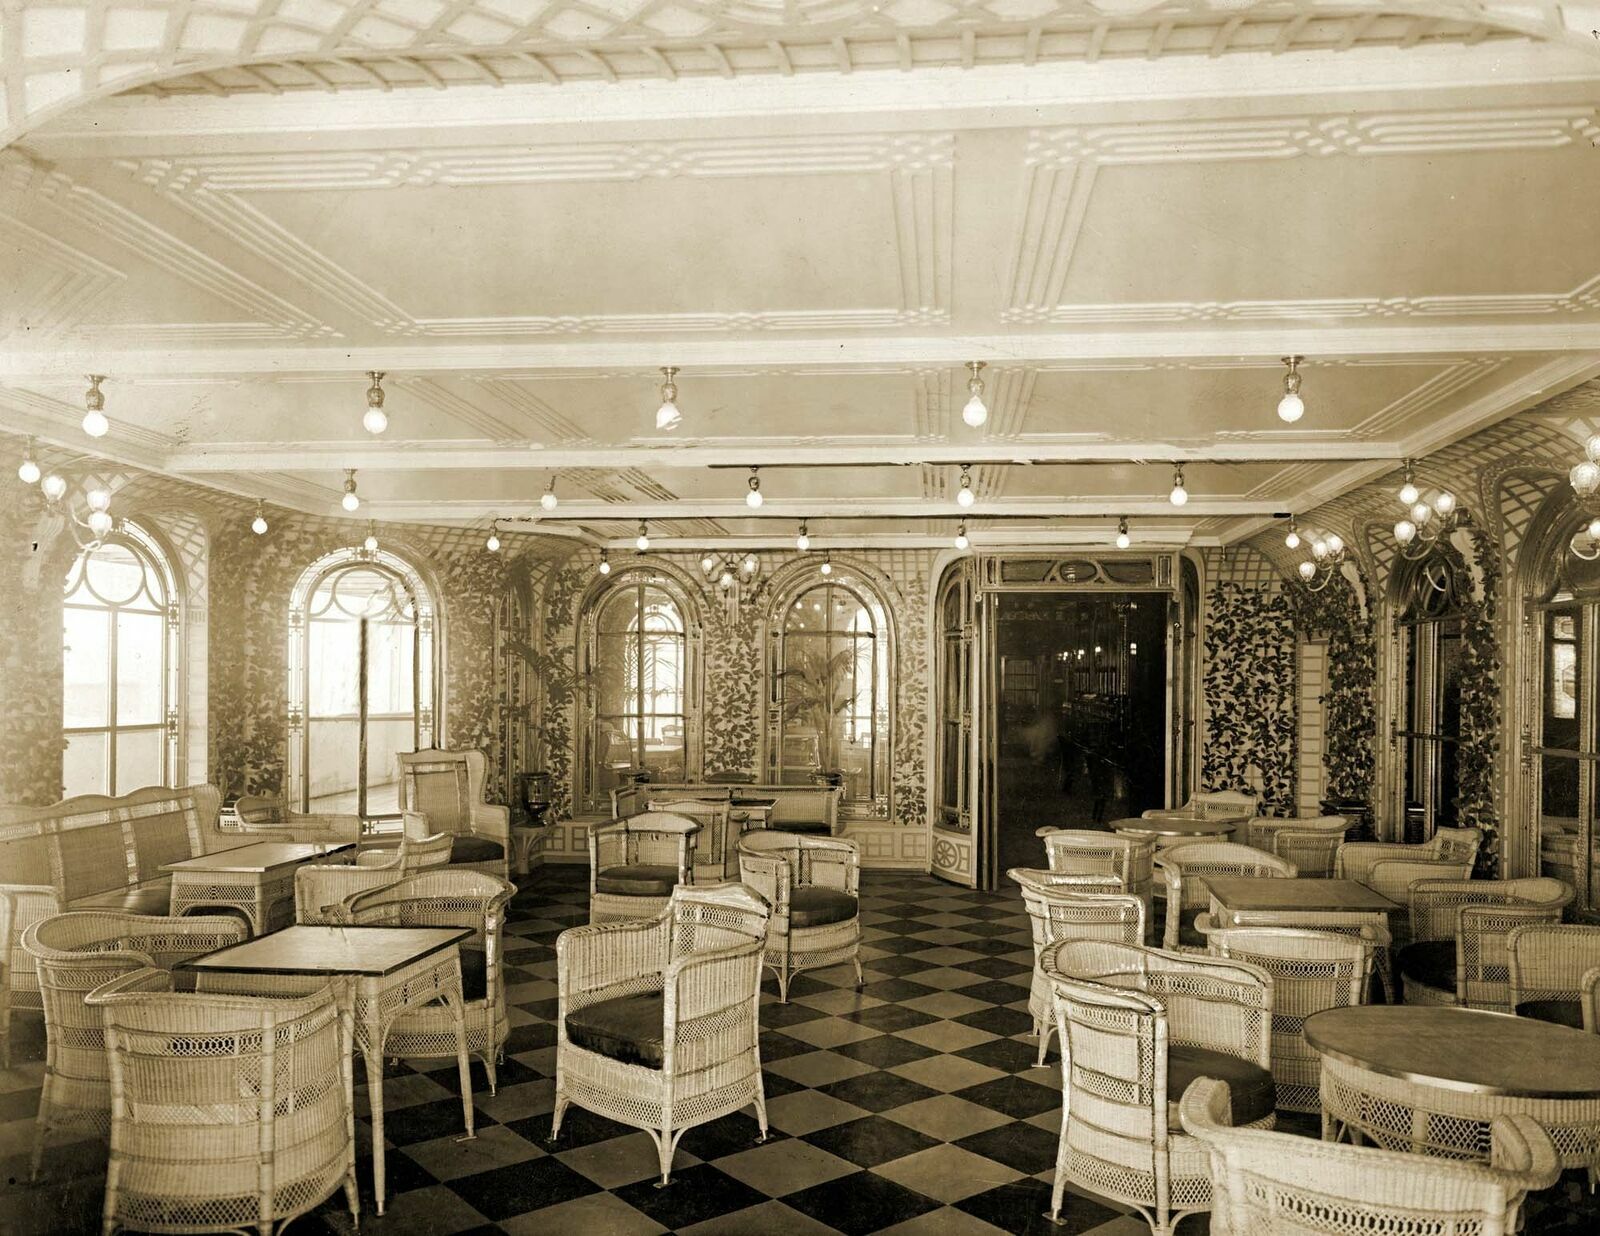 1912 Veranda Cafe & Palm Court of the Titanic Historic Picture Photo Print 4x6